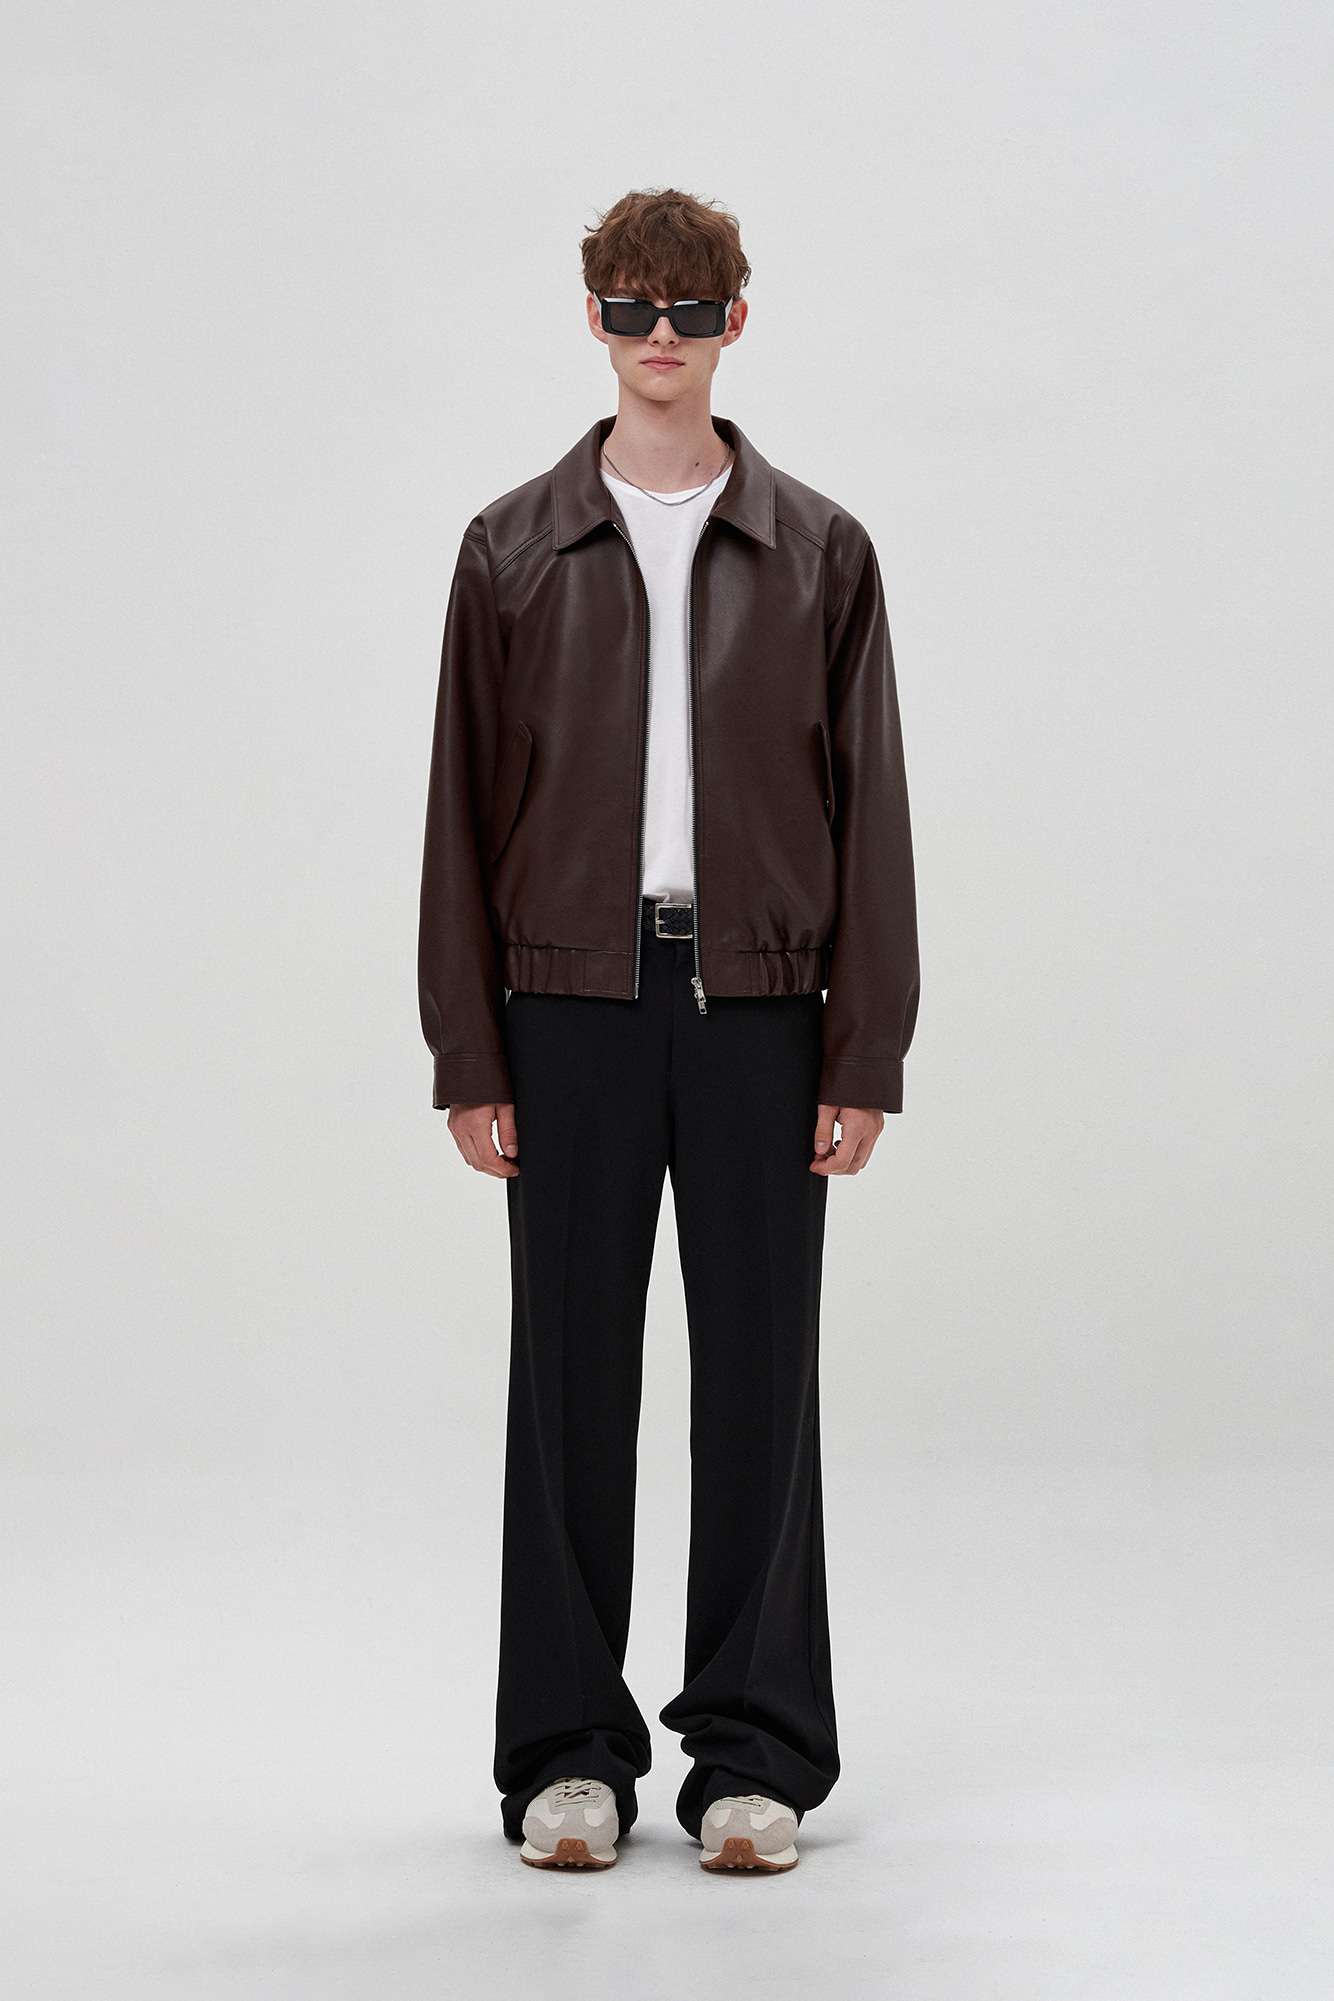 Overfit vegan leather bomber jacket (brown)